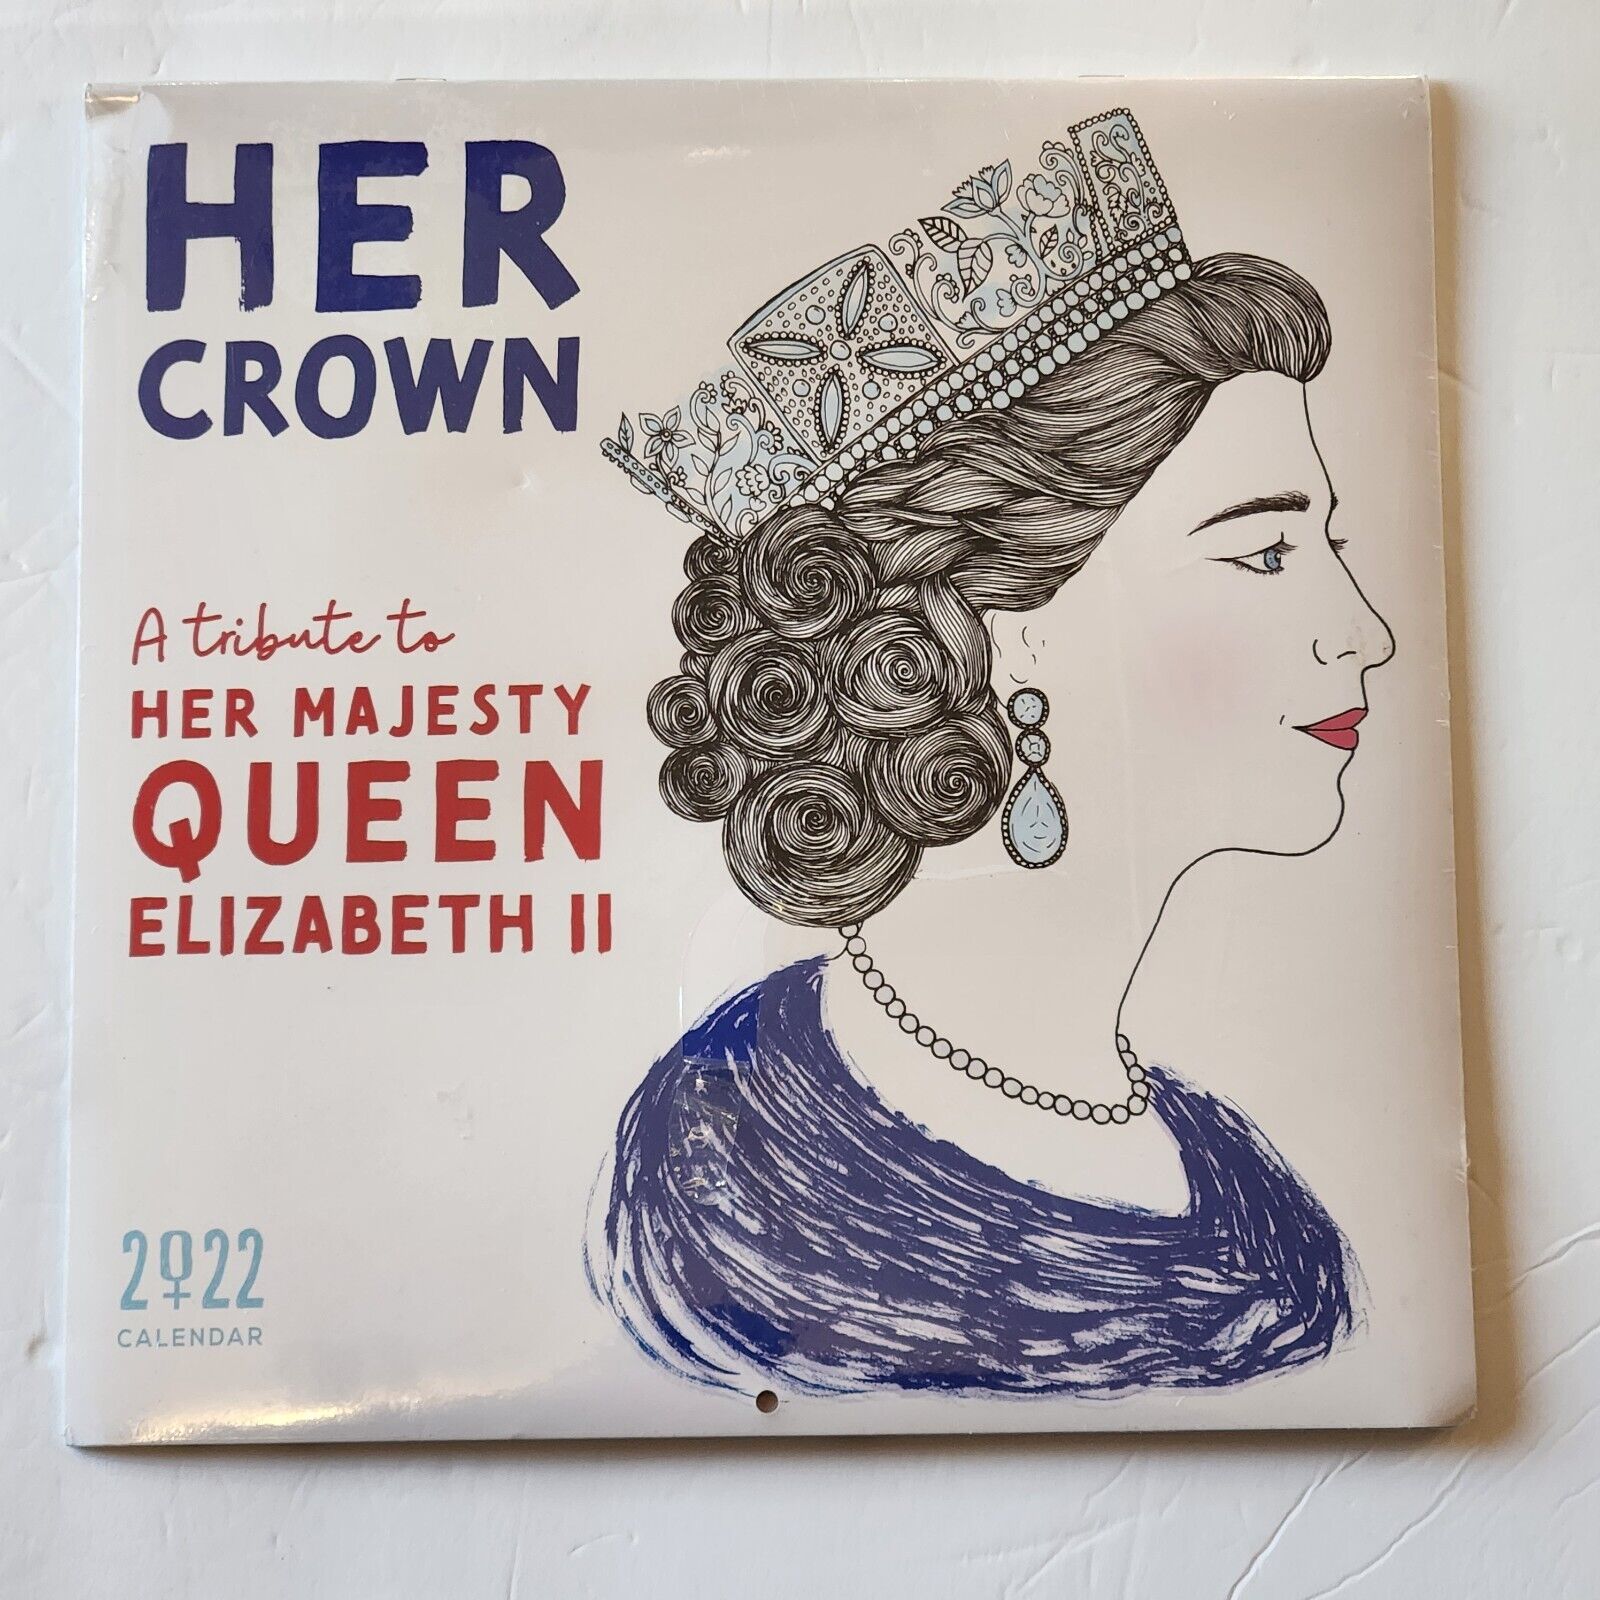 New in wrap 2022 tribute to Her Majesty Queen Elizabeth ll calendar